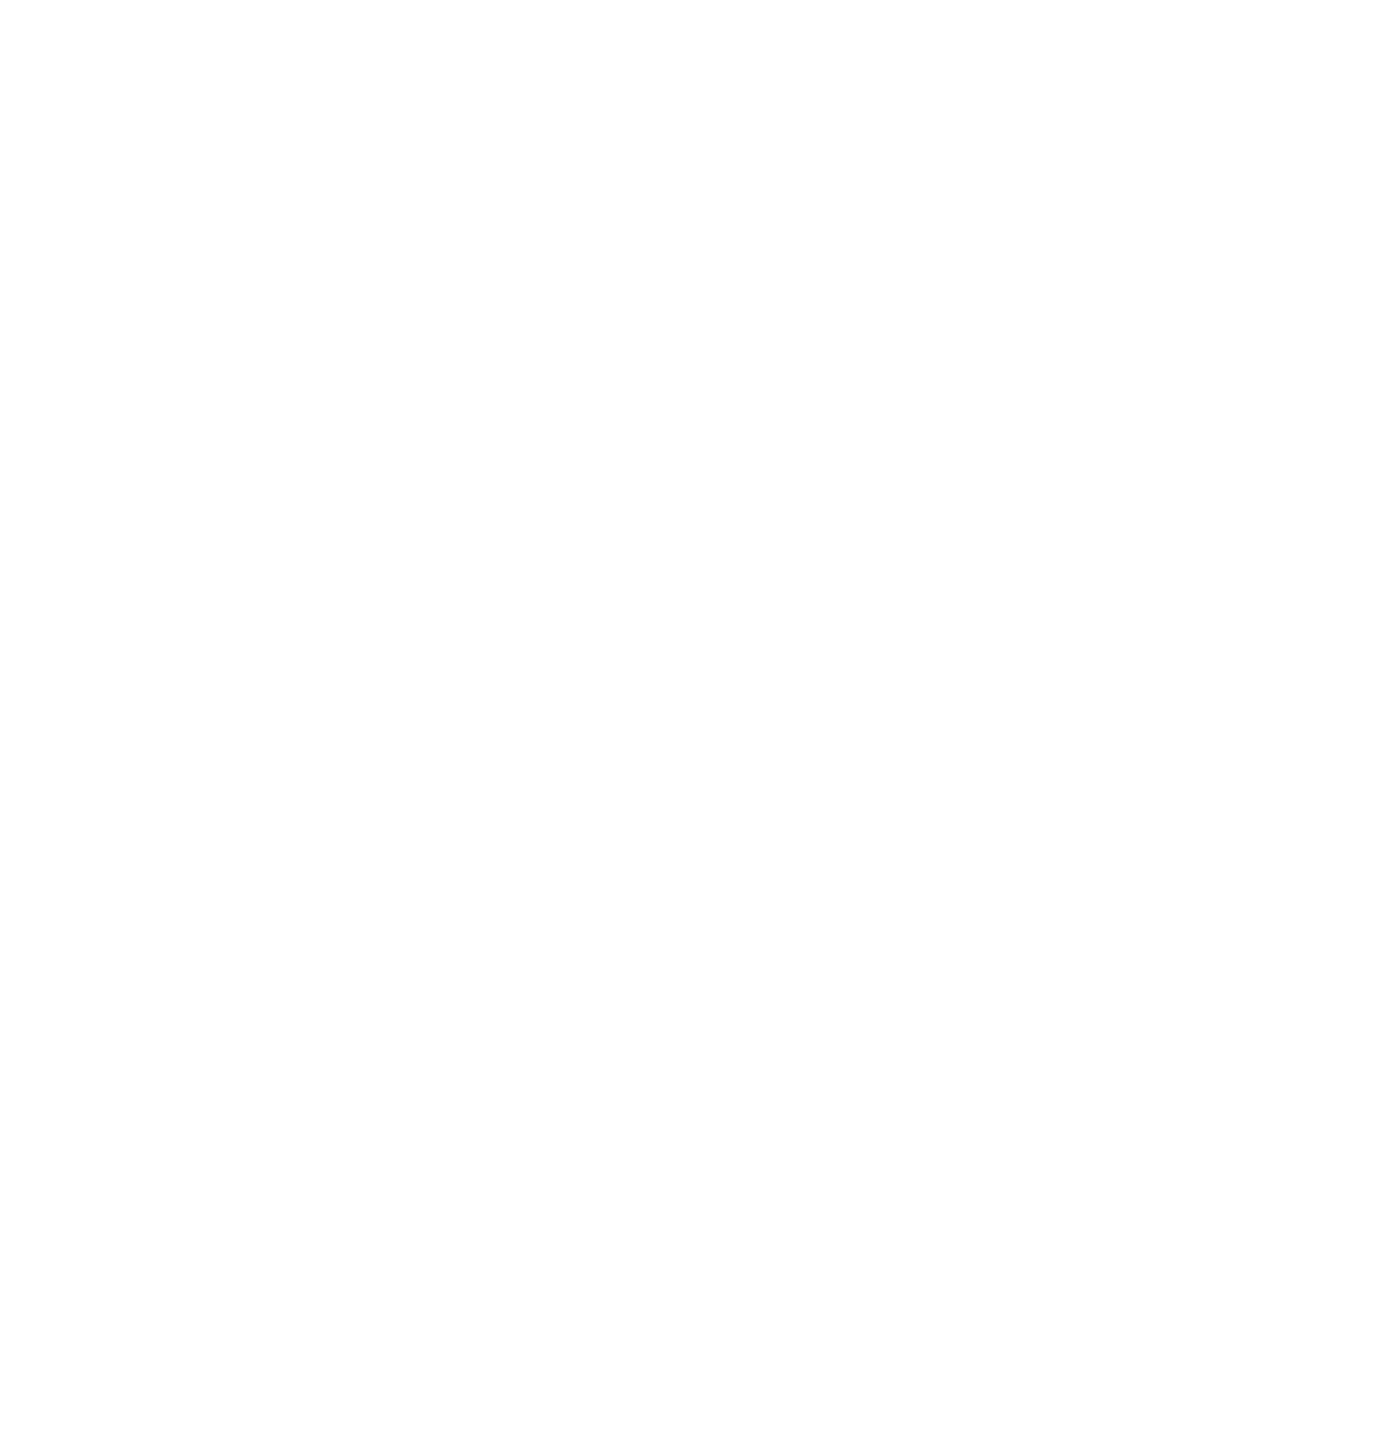 Cusco Creations